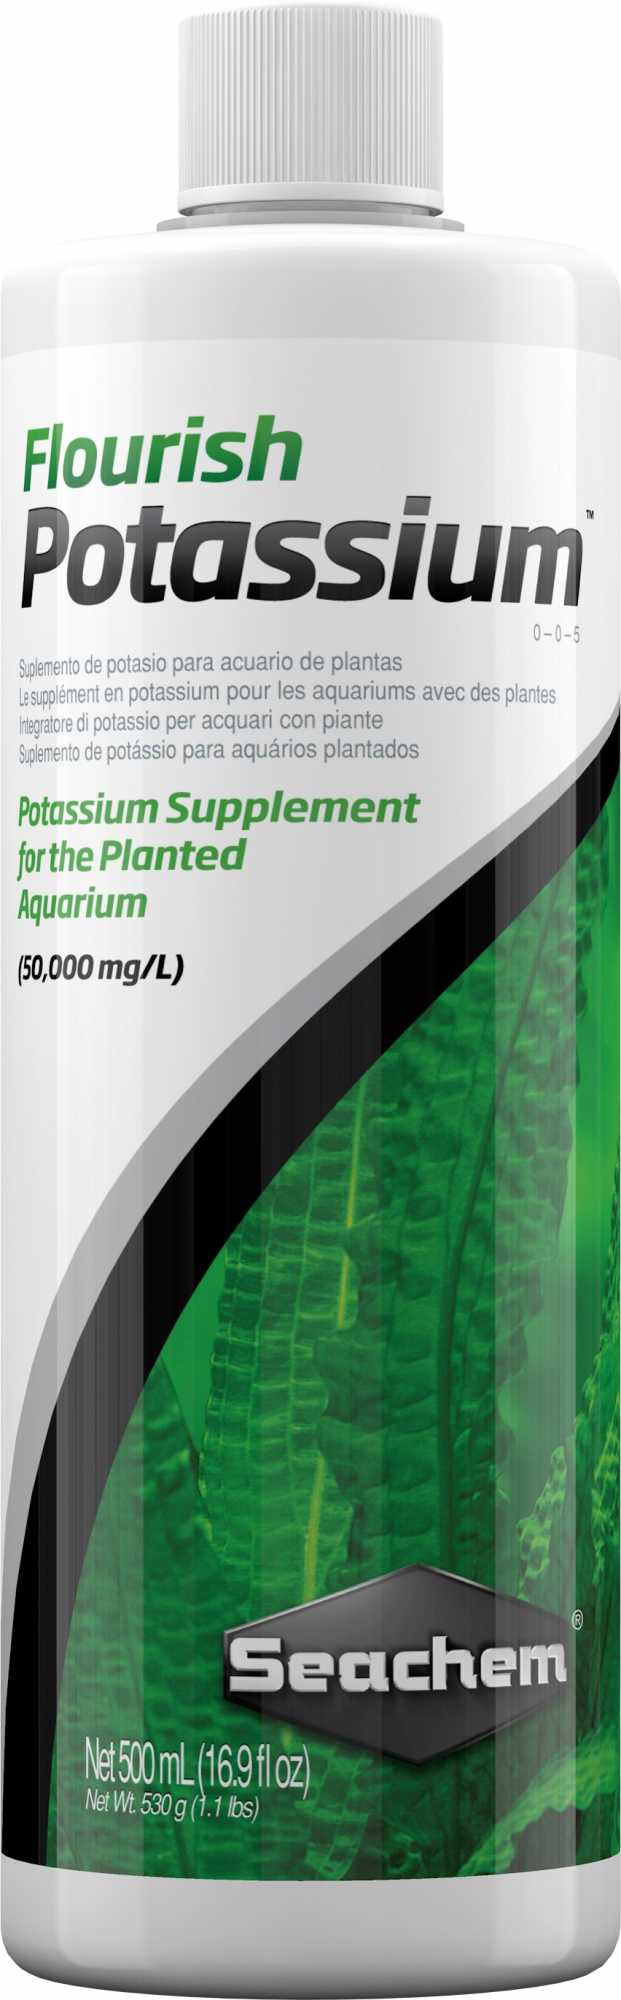 Potassio per piante acquatiche - Flourish Potassium